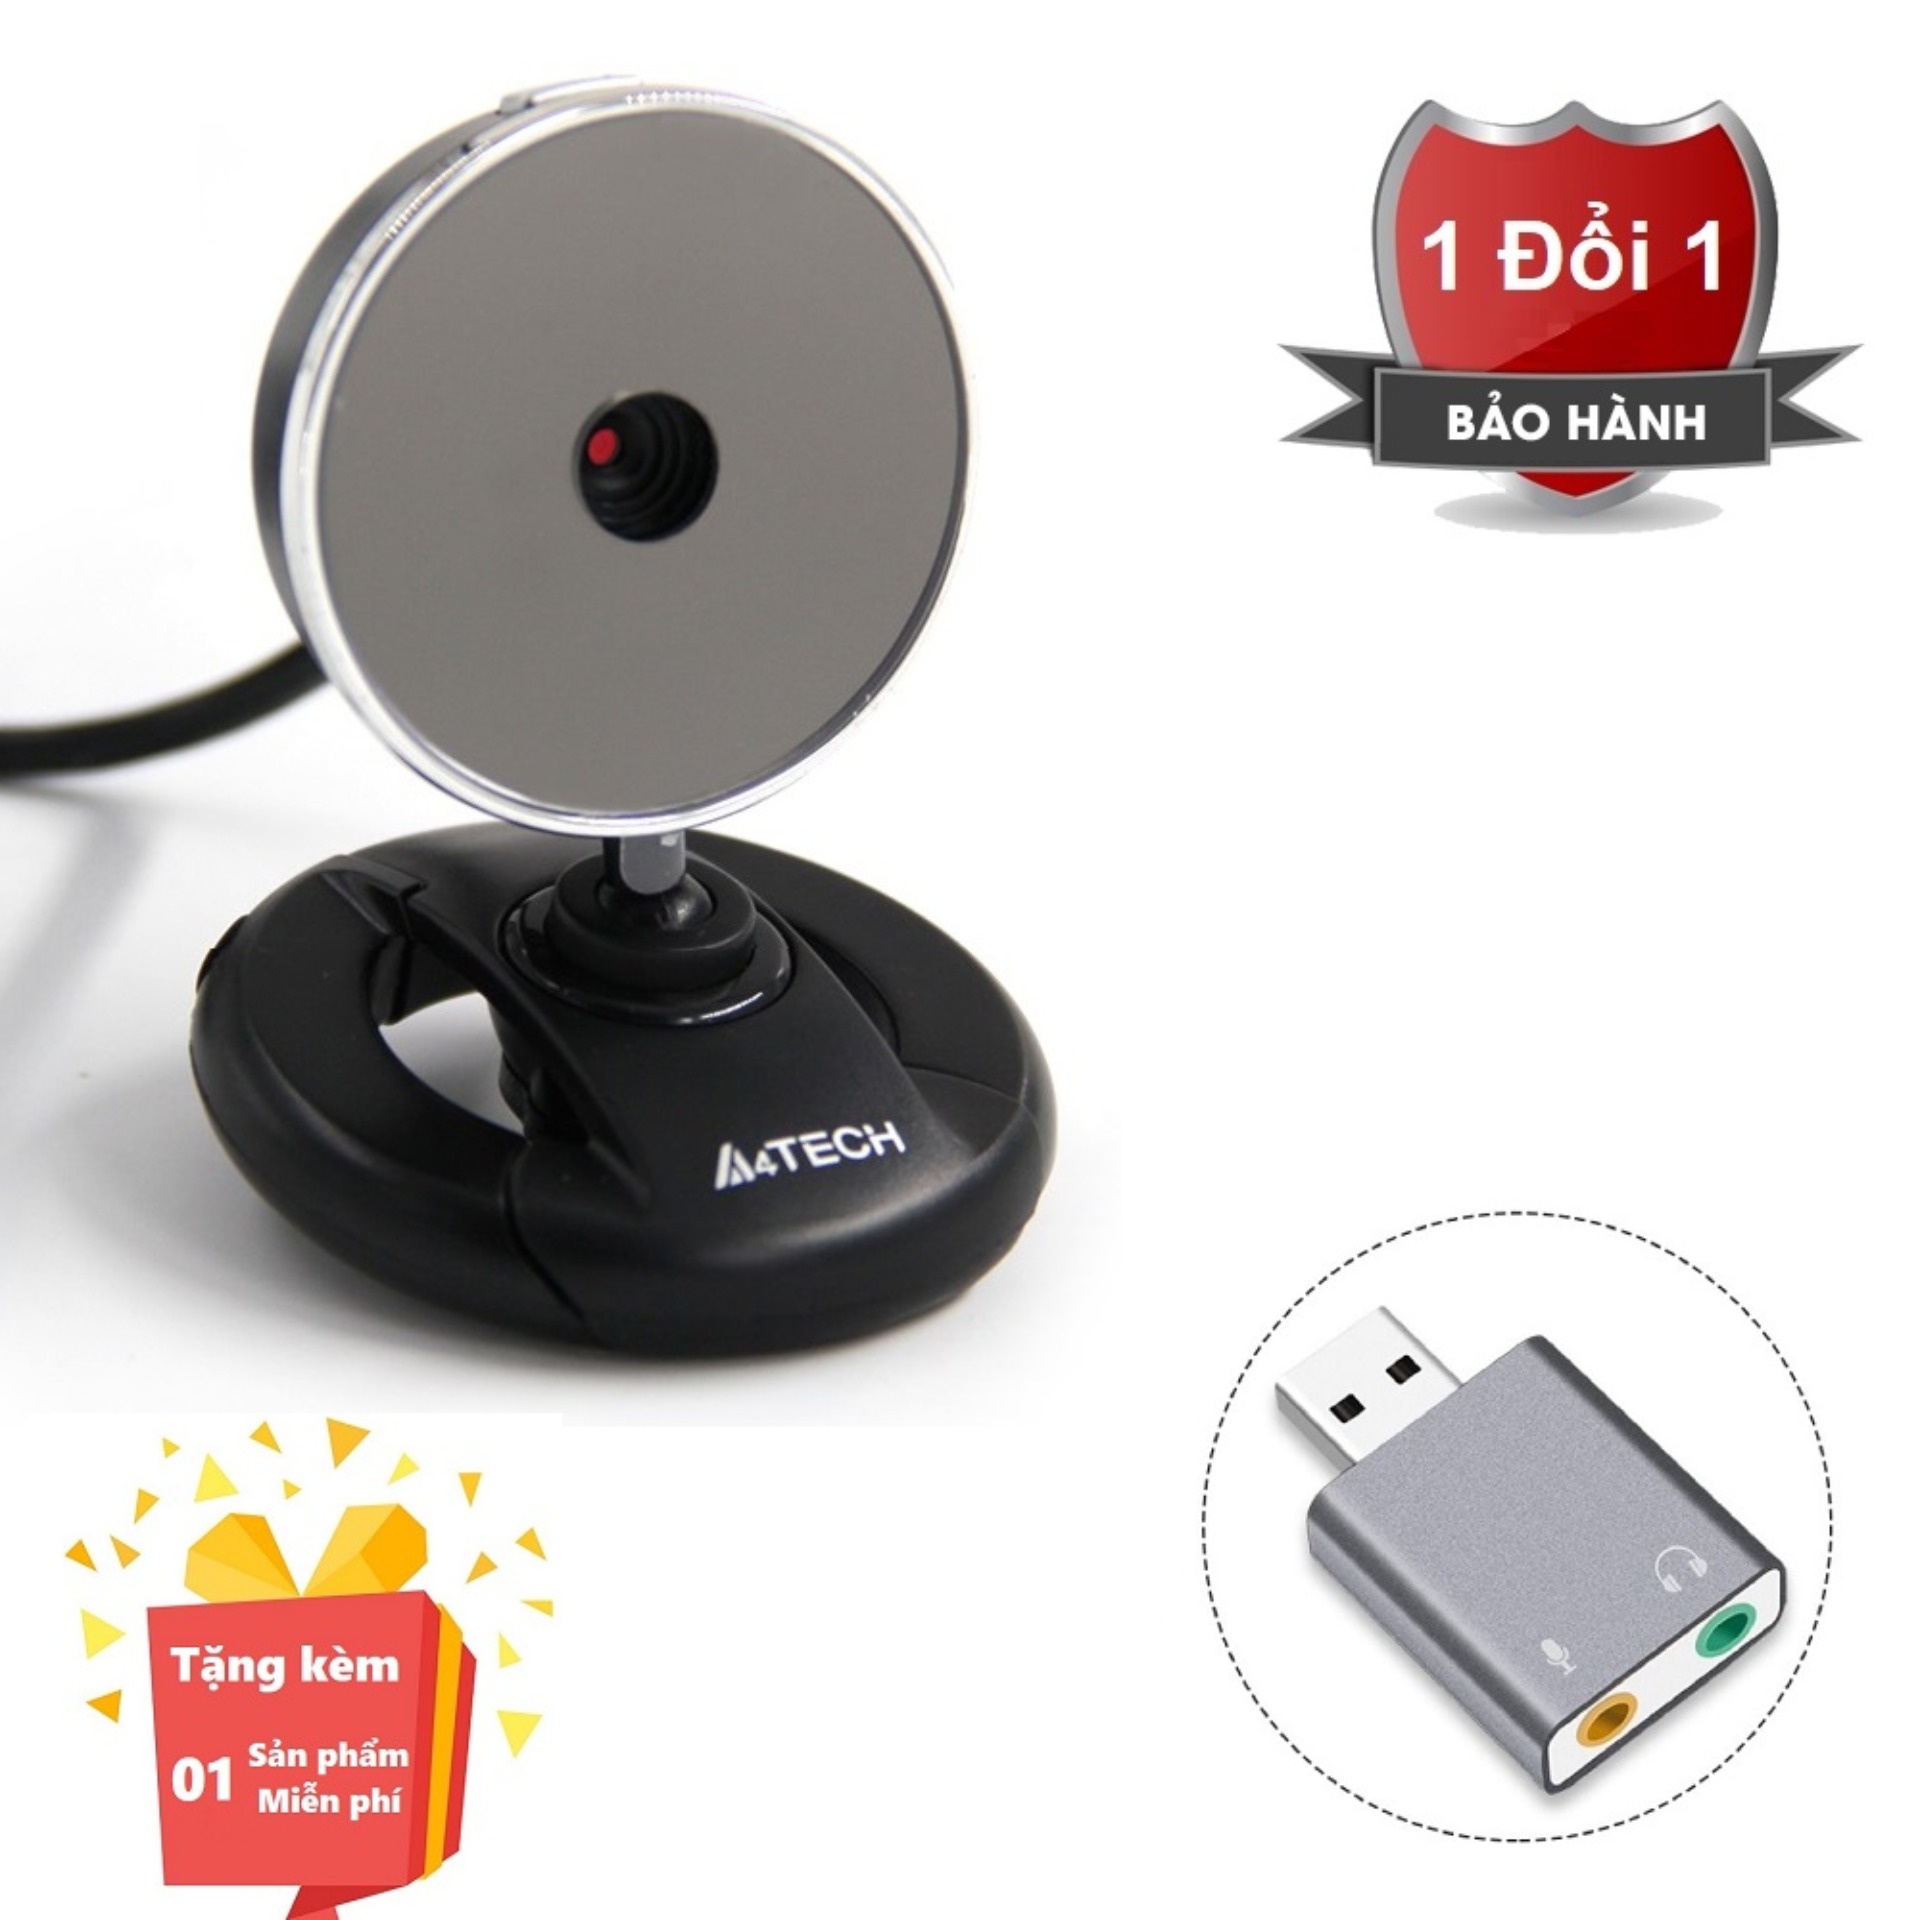 Webcam tích hợp Micro cho máy tính, PC, Laptop A4tech 520F